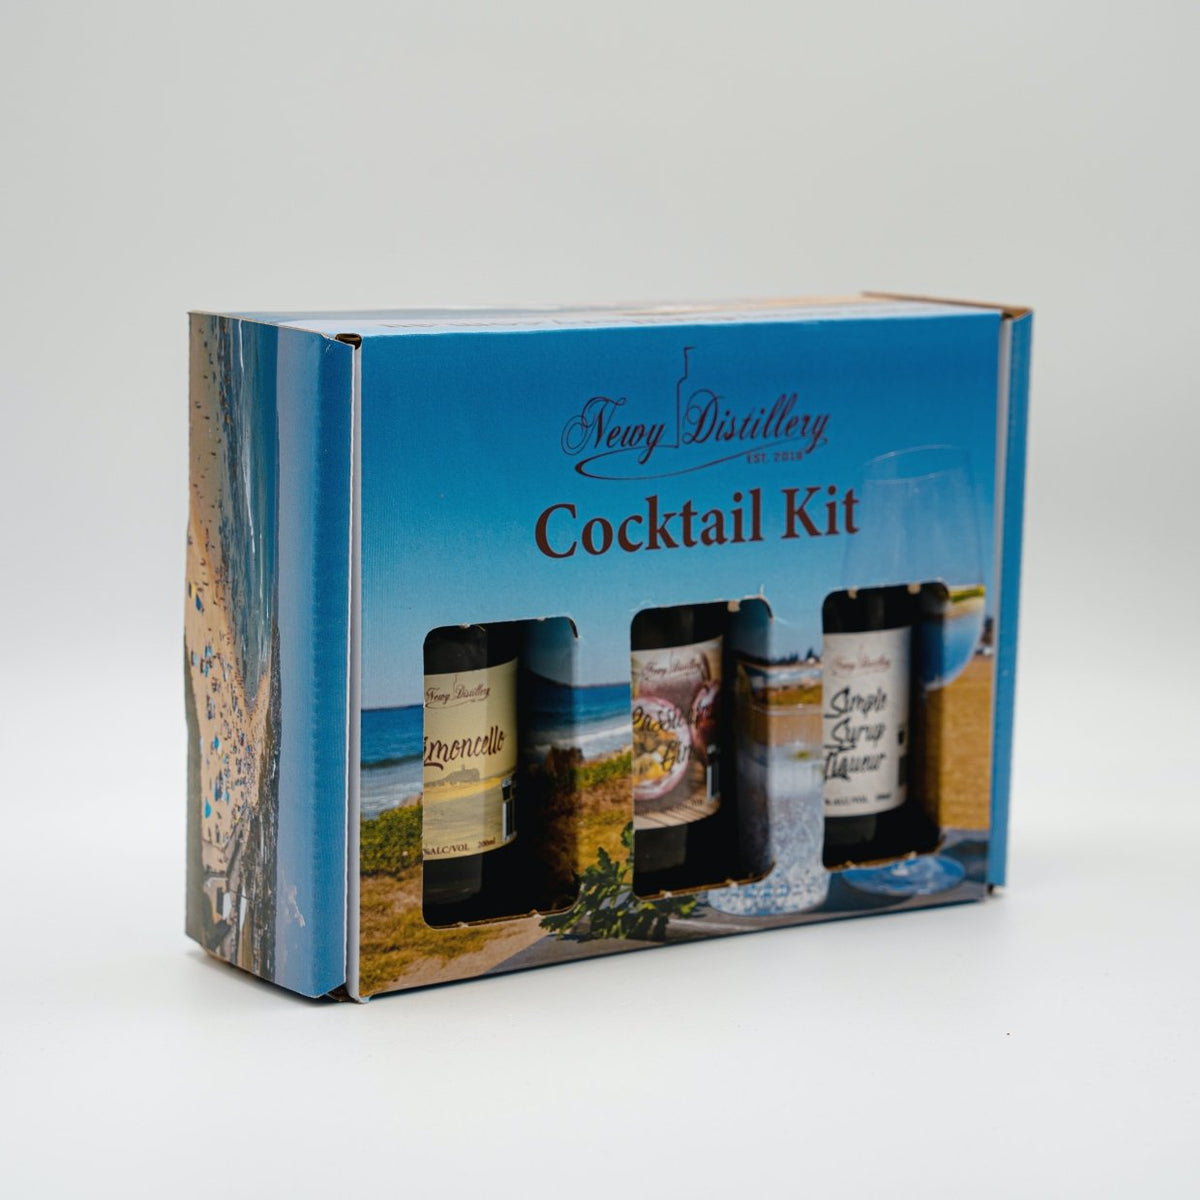 Cocktail-Kit Gift Box – Litchfield Distillery